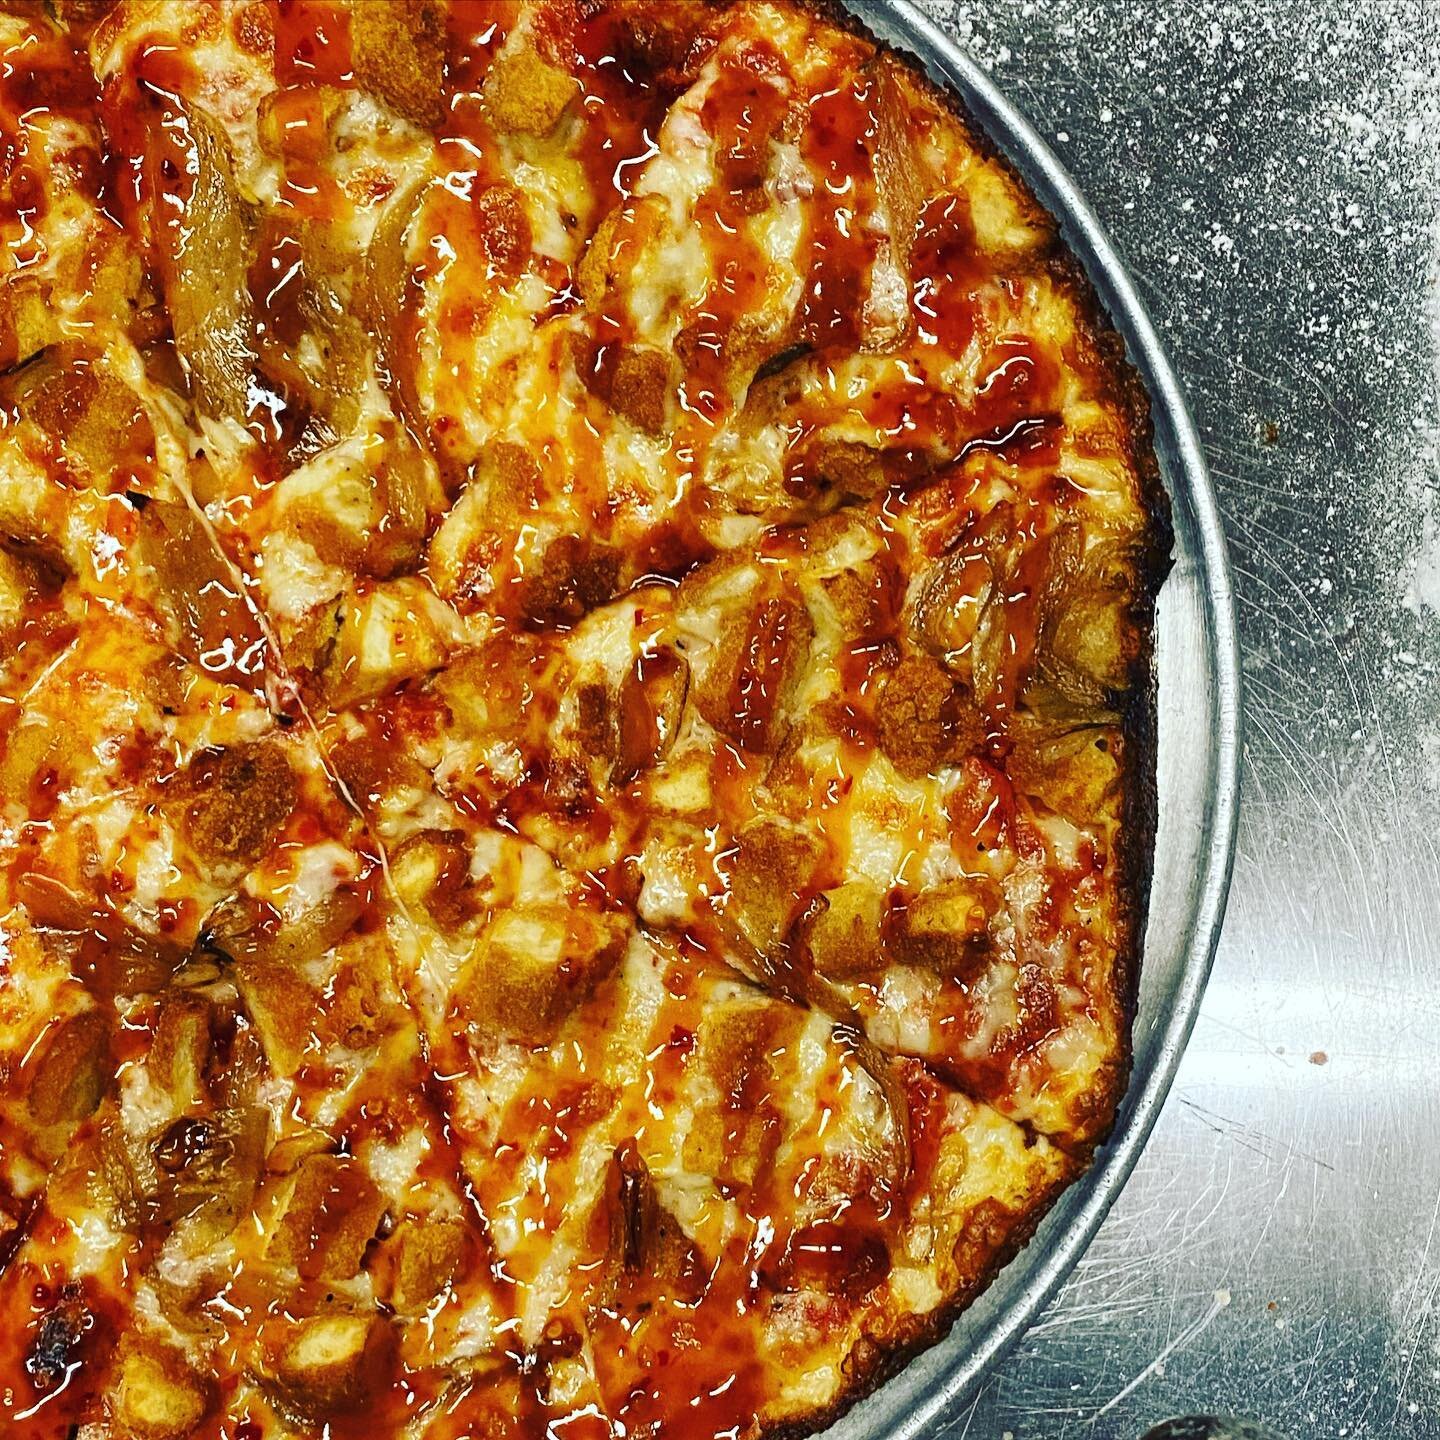 Awwwwww yeah!  Korean Rooster will warm ya up tonight 🔥🍕🐓 Fried Chicken, Saut&eacute;ed Onions, Finished w/ a Korean Drizzle.  #nashobaclub #nashobaclubpizza #craftpizza #koreanrooster #korean #rooster #pizza #pizzaofinstagram #pizzaofinsta